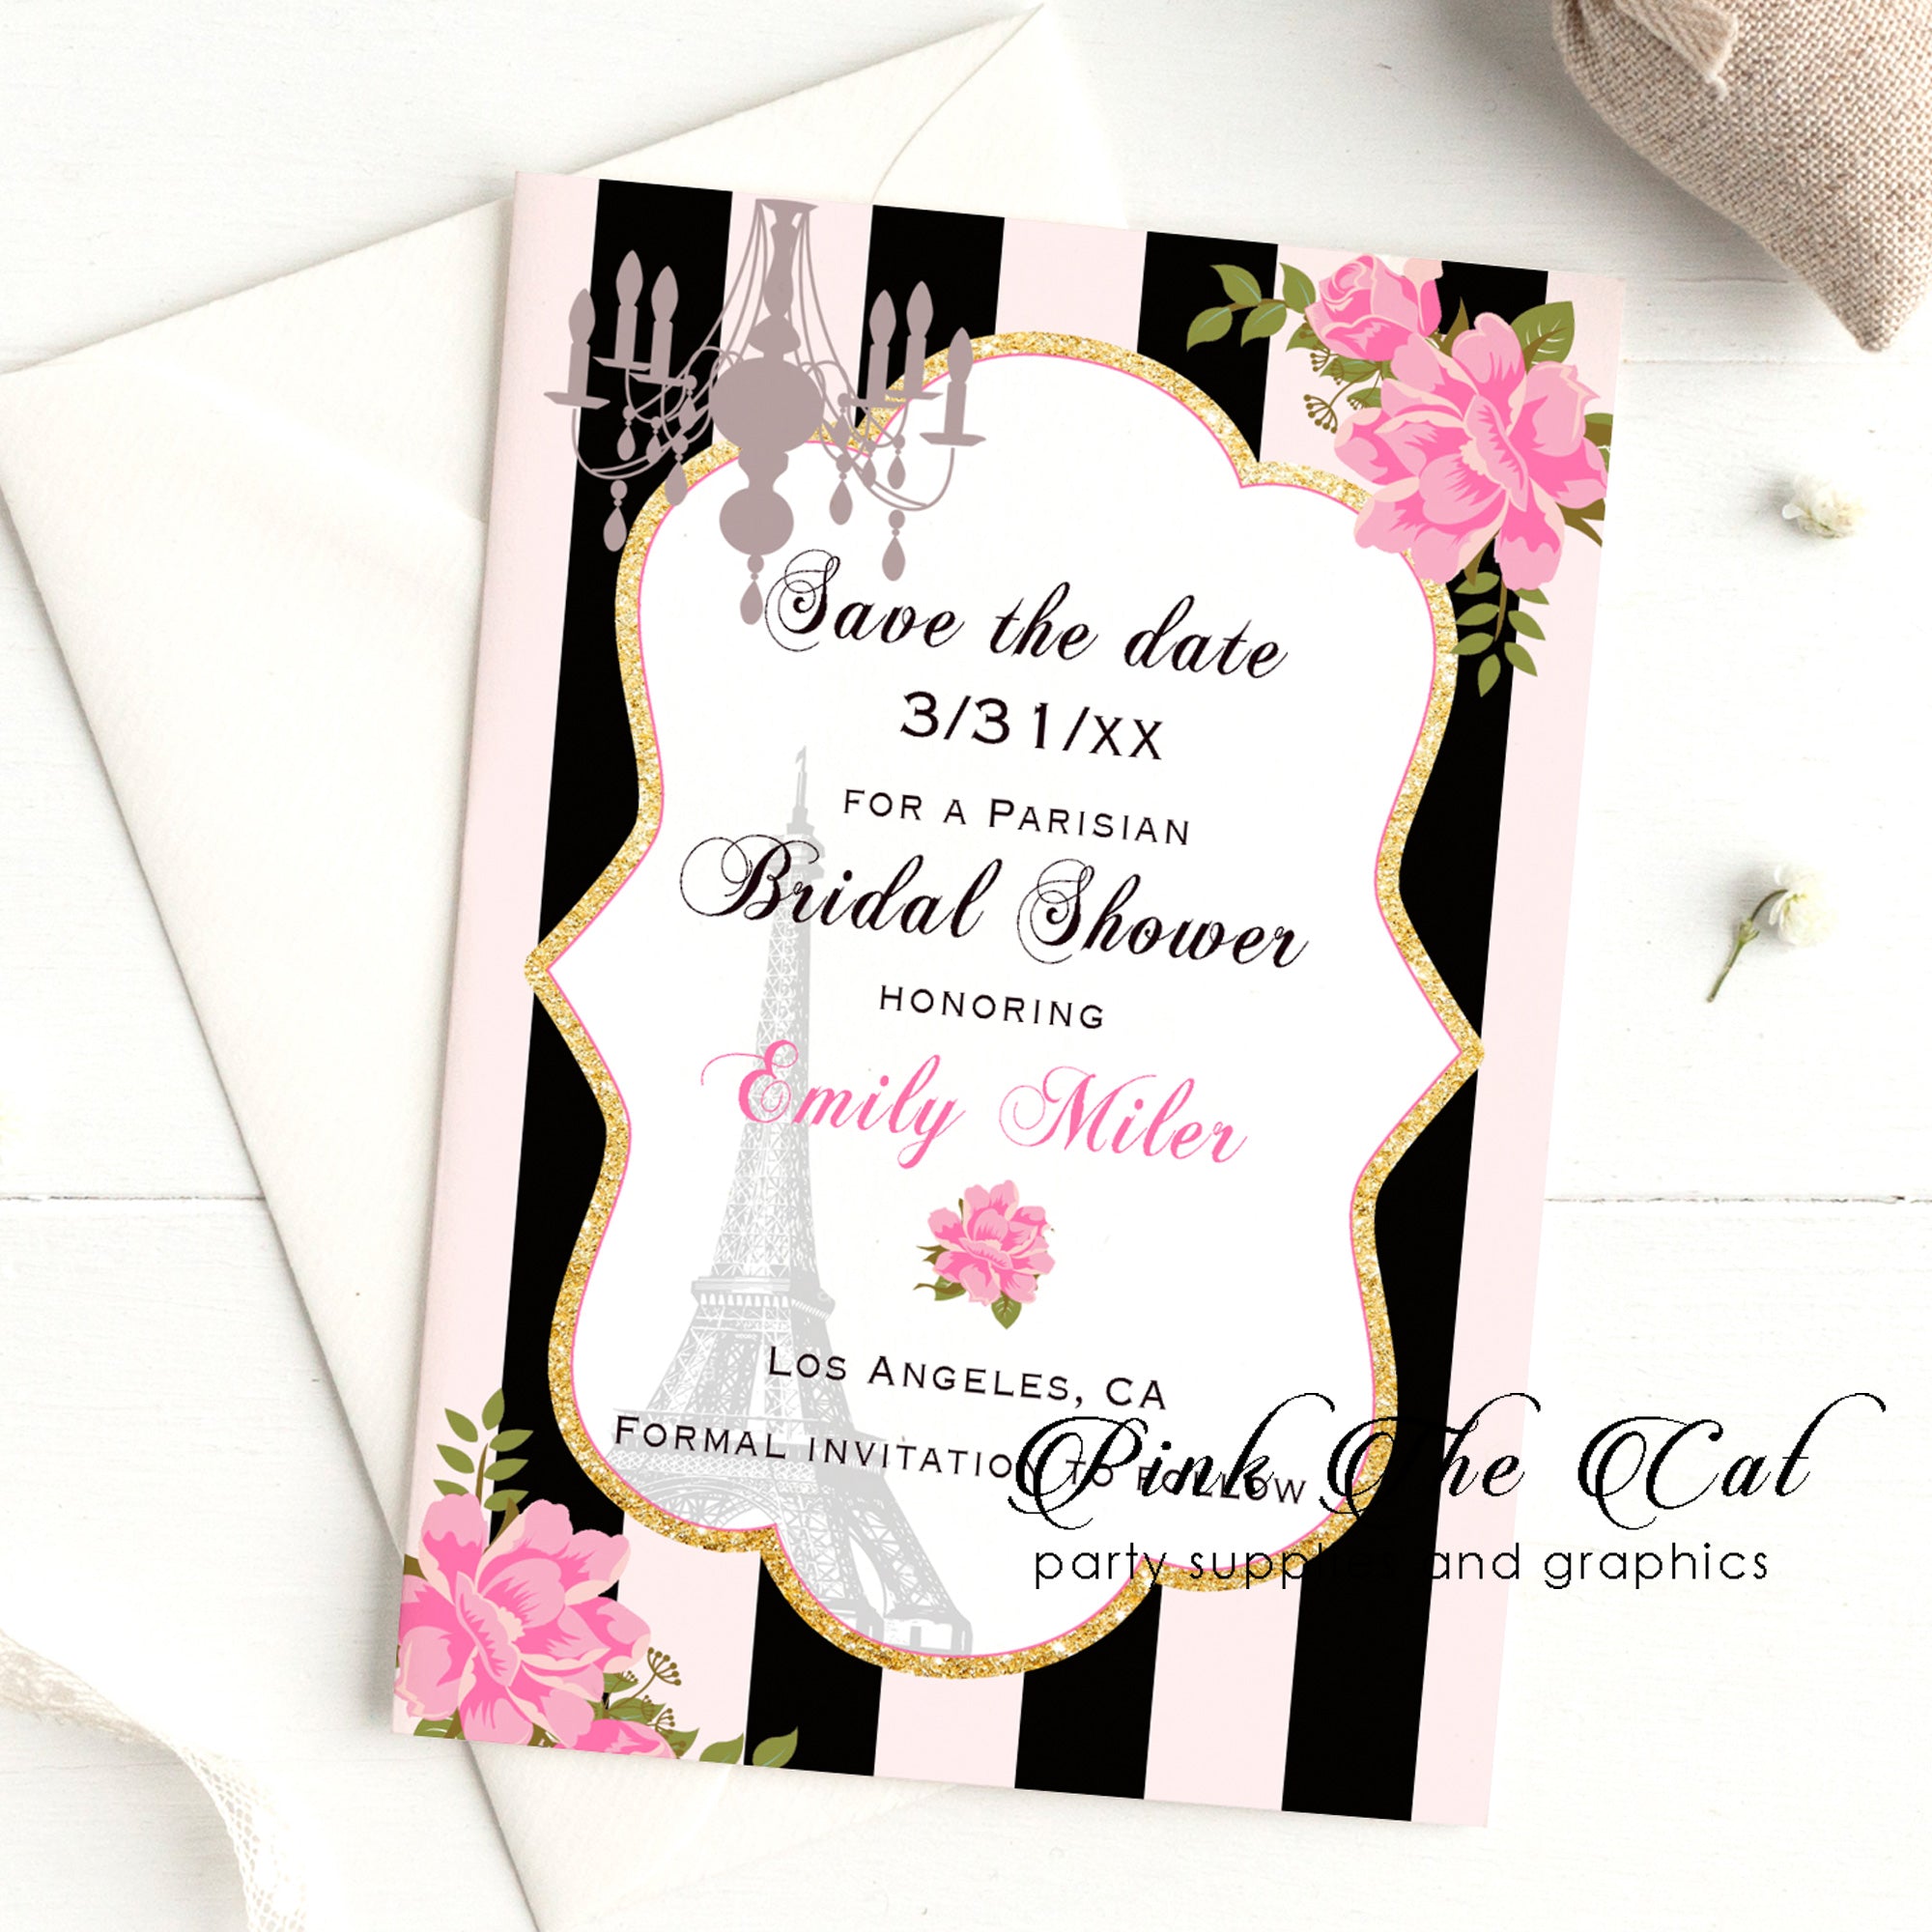 Paris chic invitations pink black bridal wedding shower printable